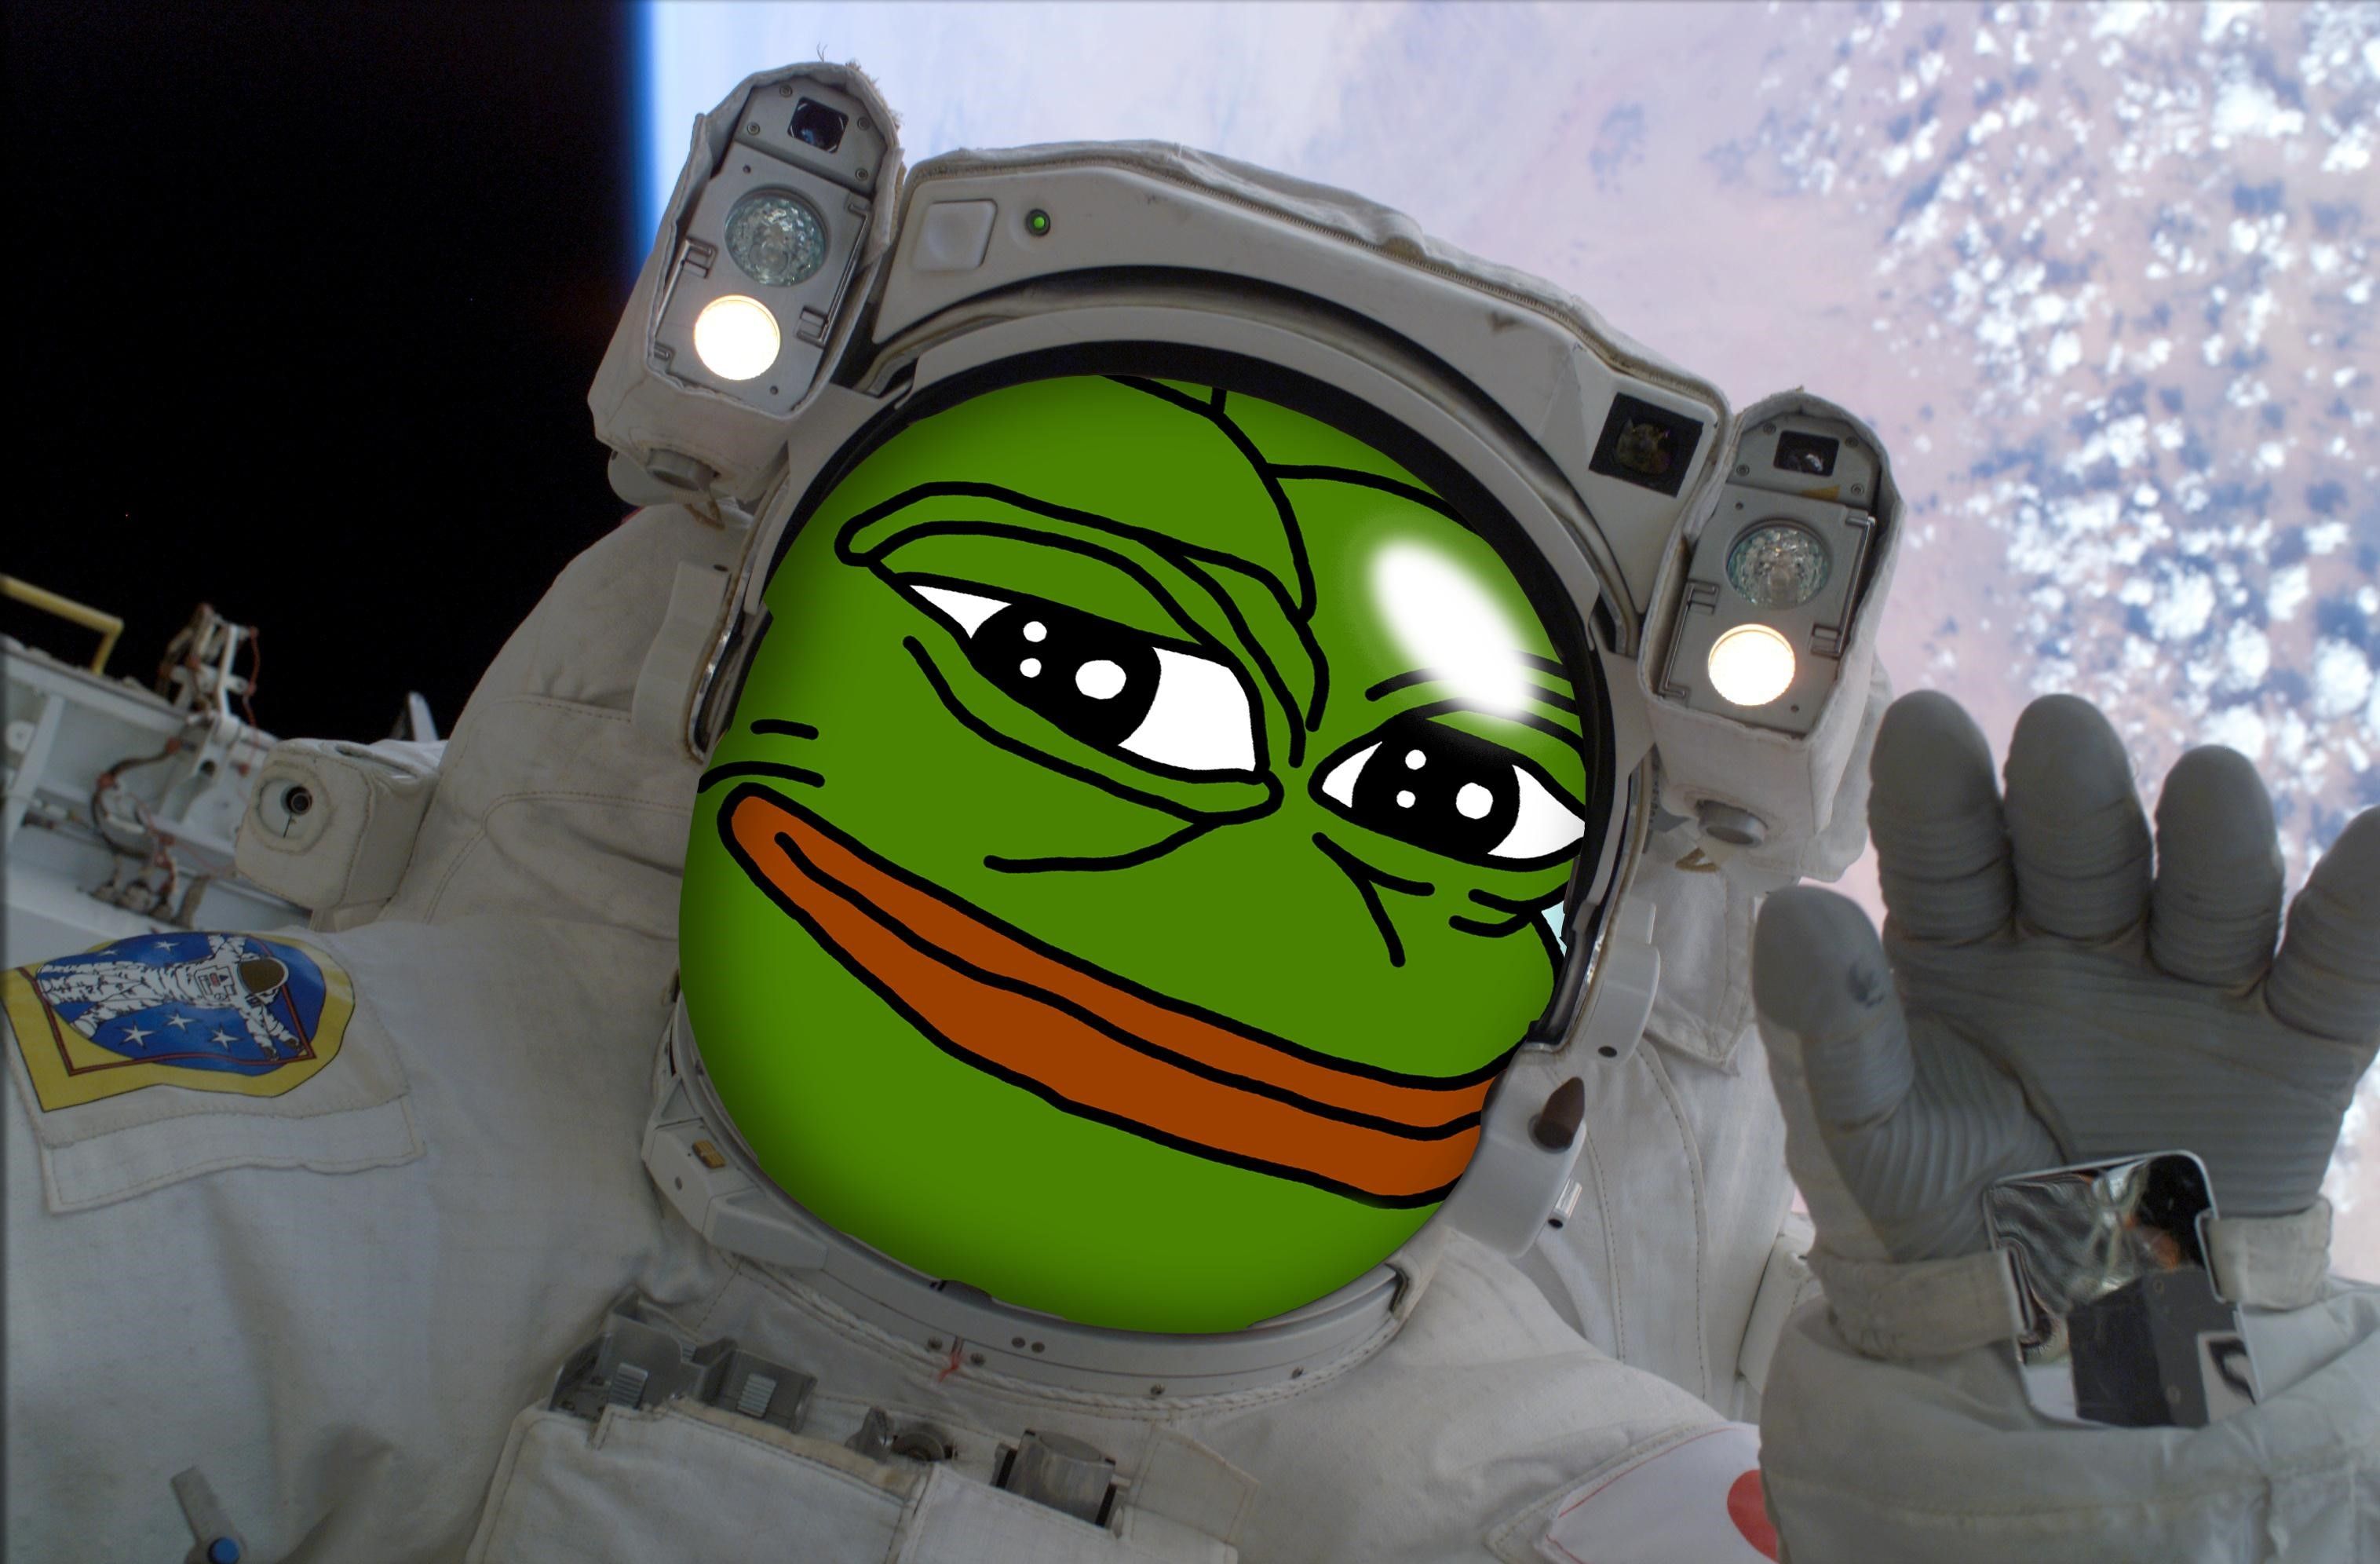 Pepe/apu a day - 275 Astronaut Pepe